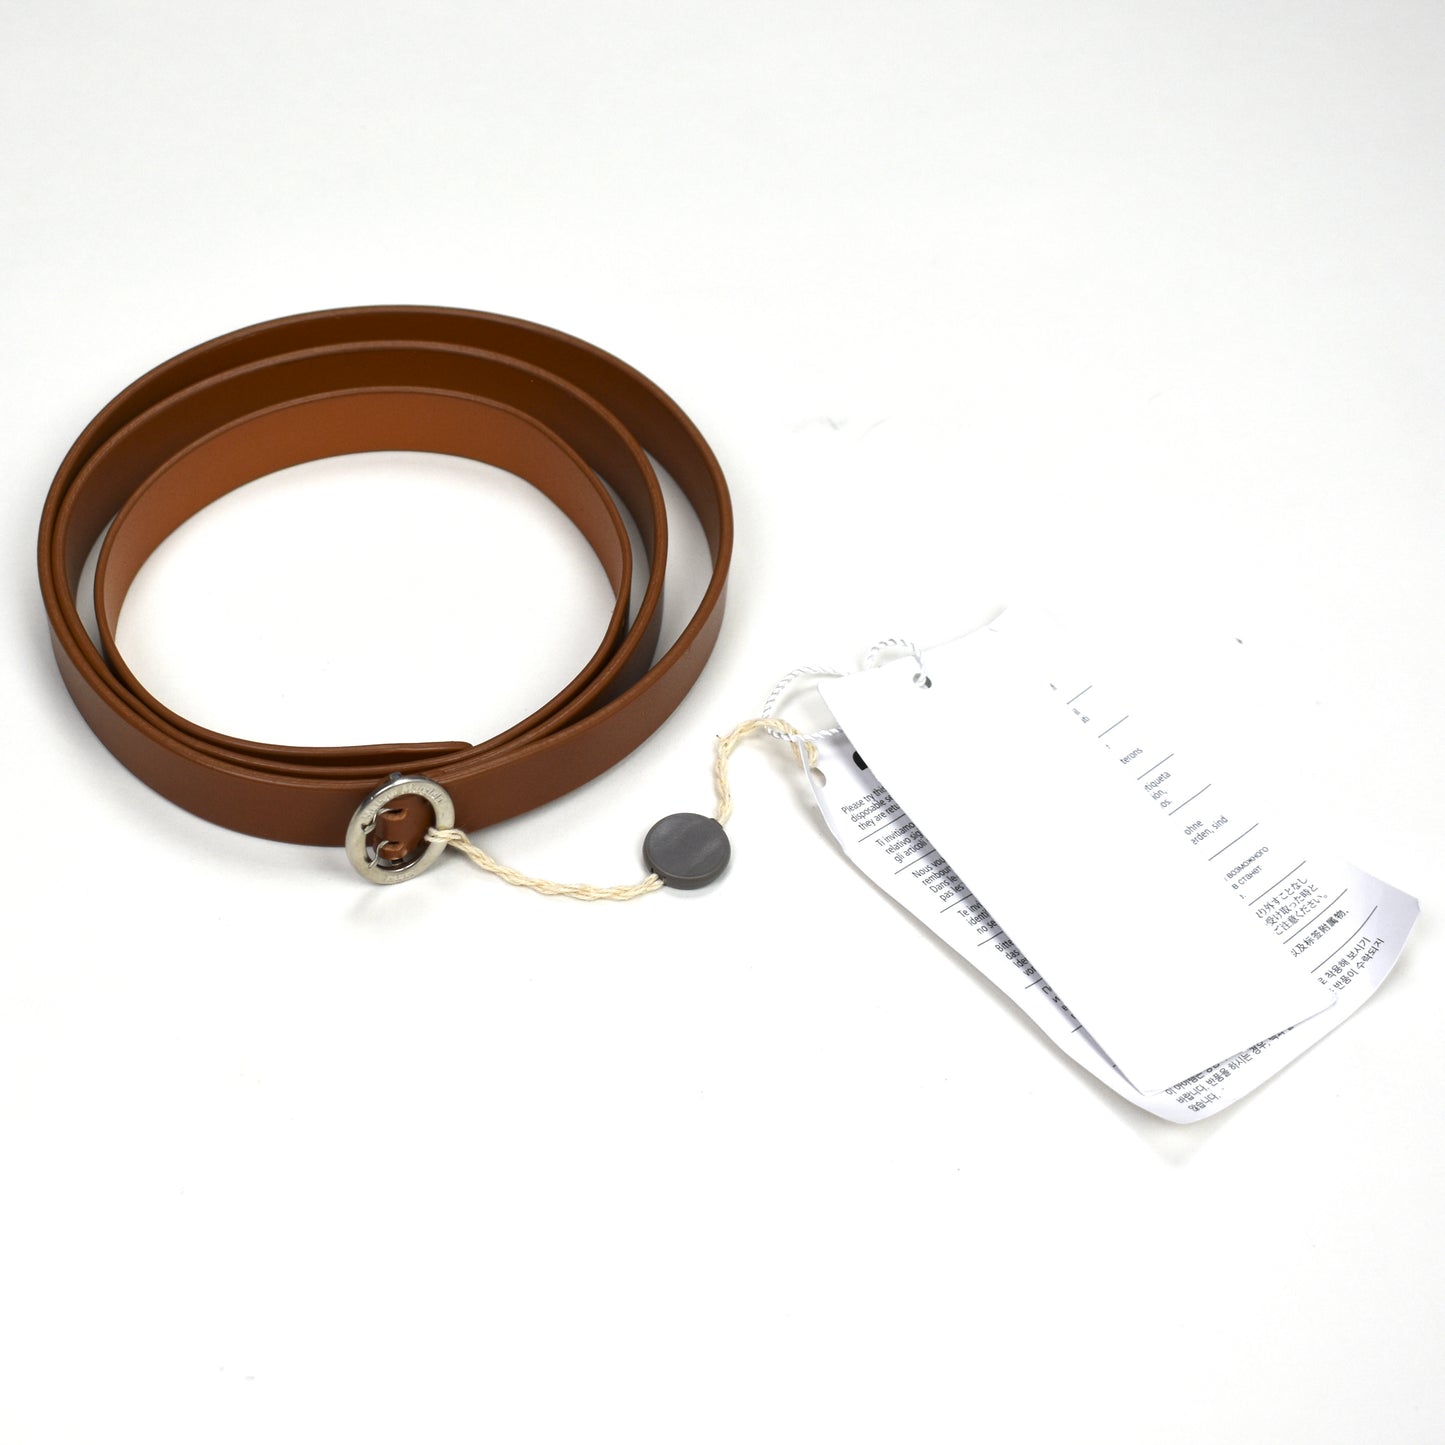 Maison Margiela - Thin Brown Leather Oval Buckle Belt